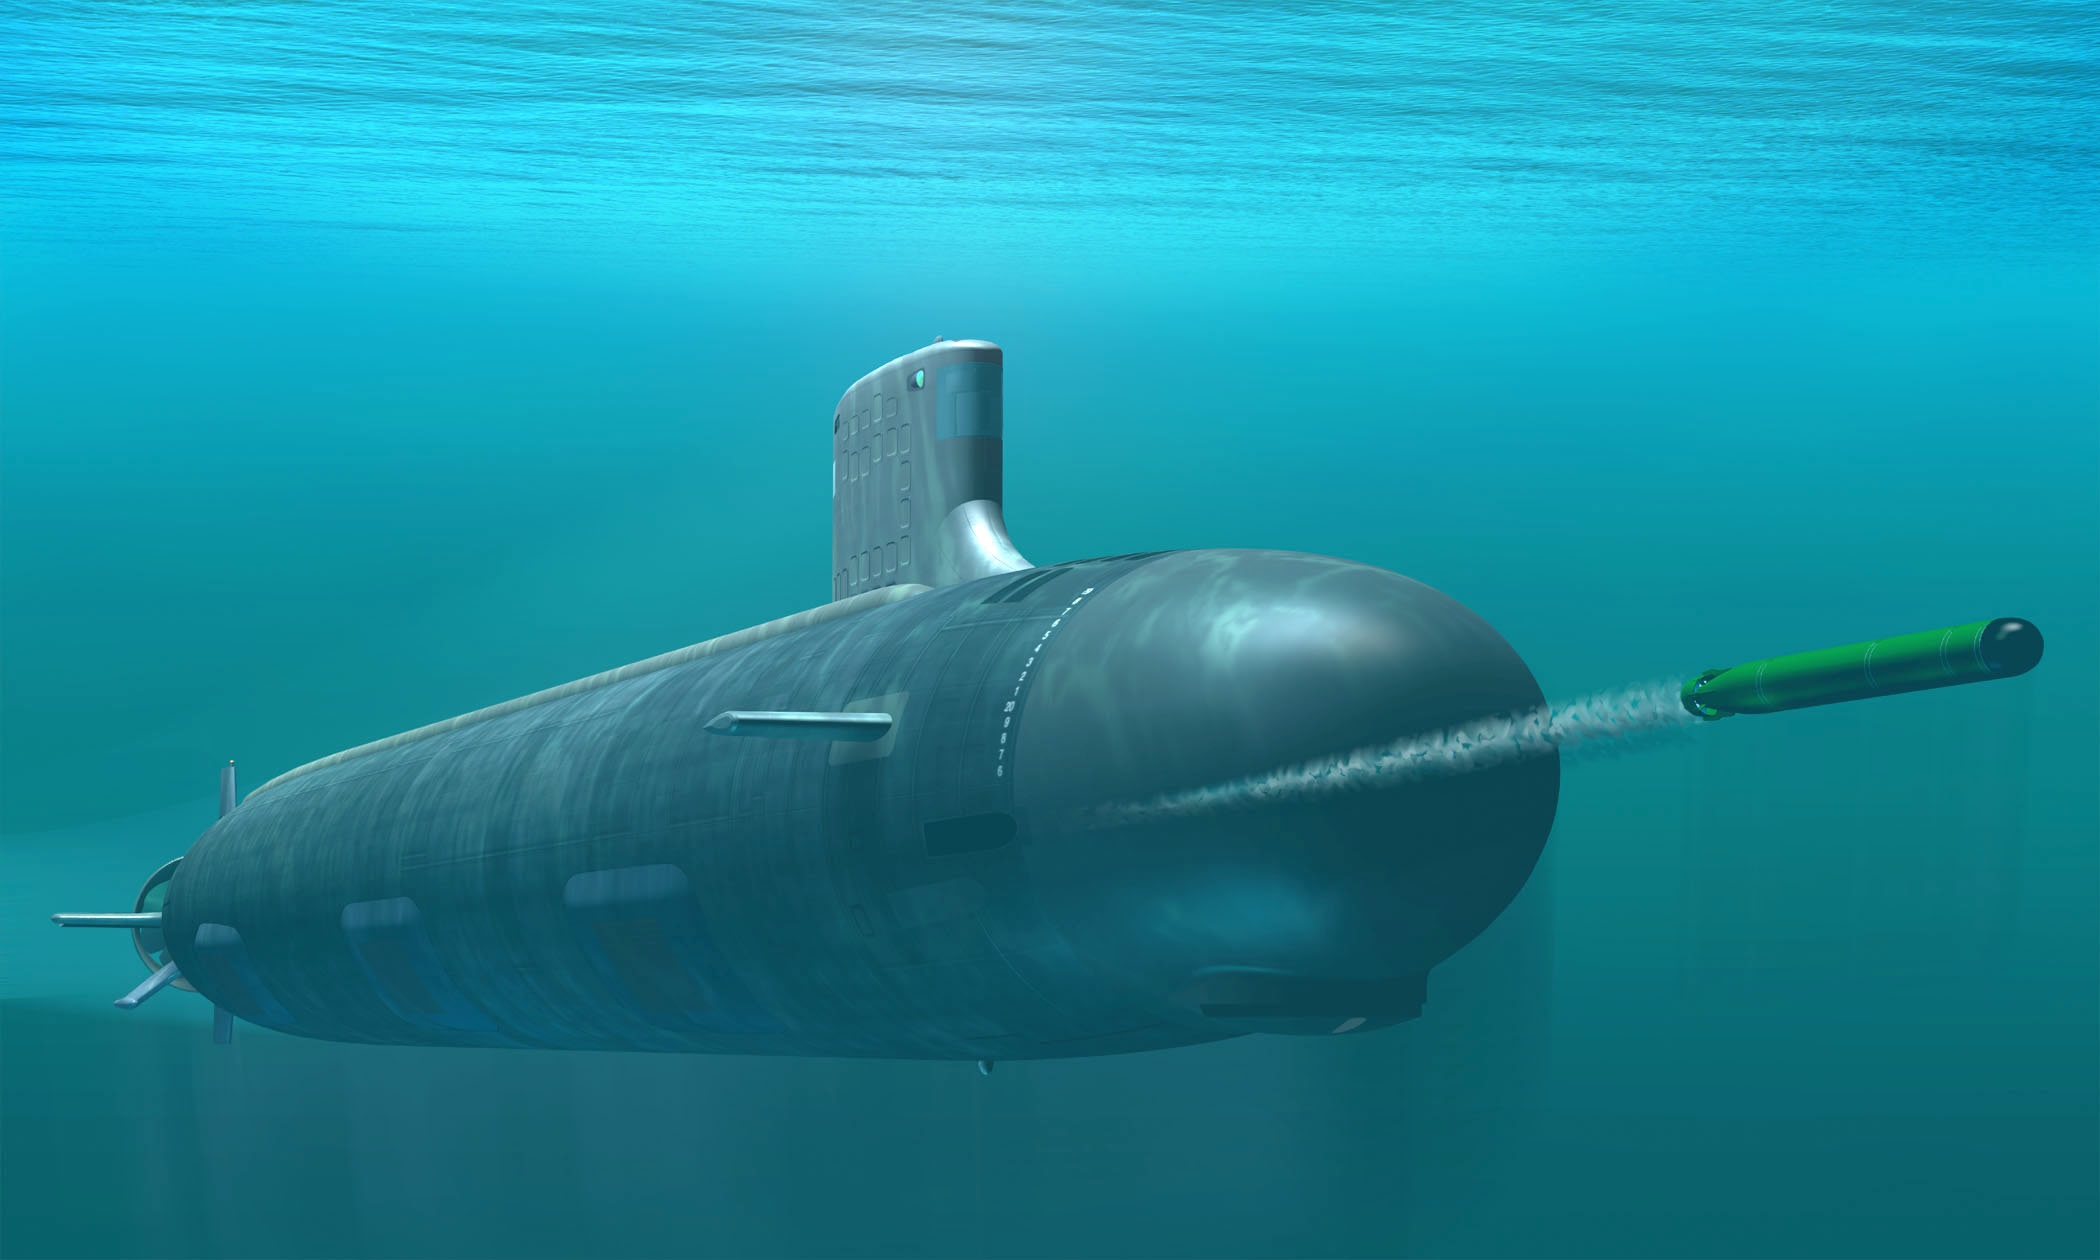 russian submarine under attack